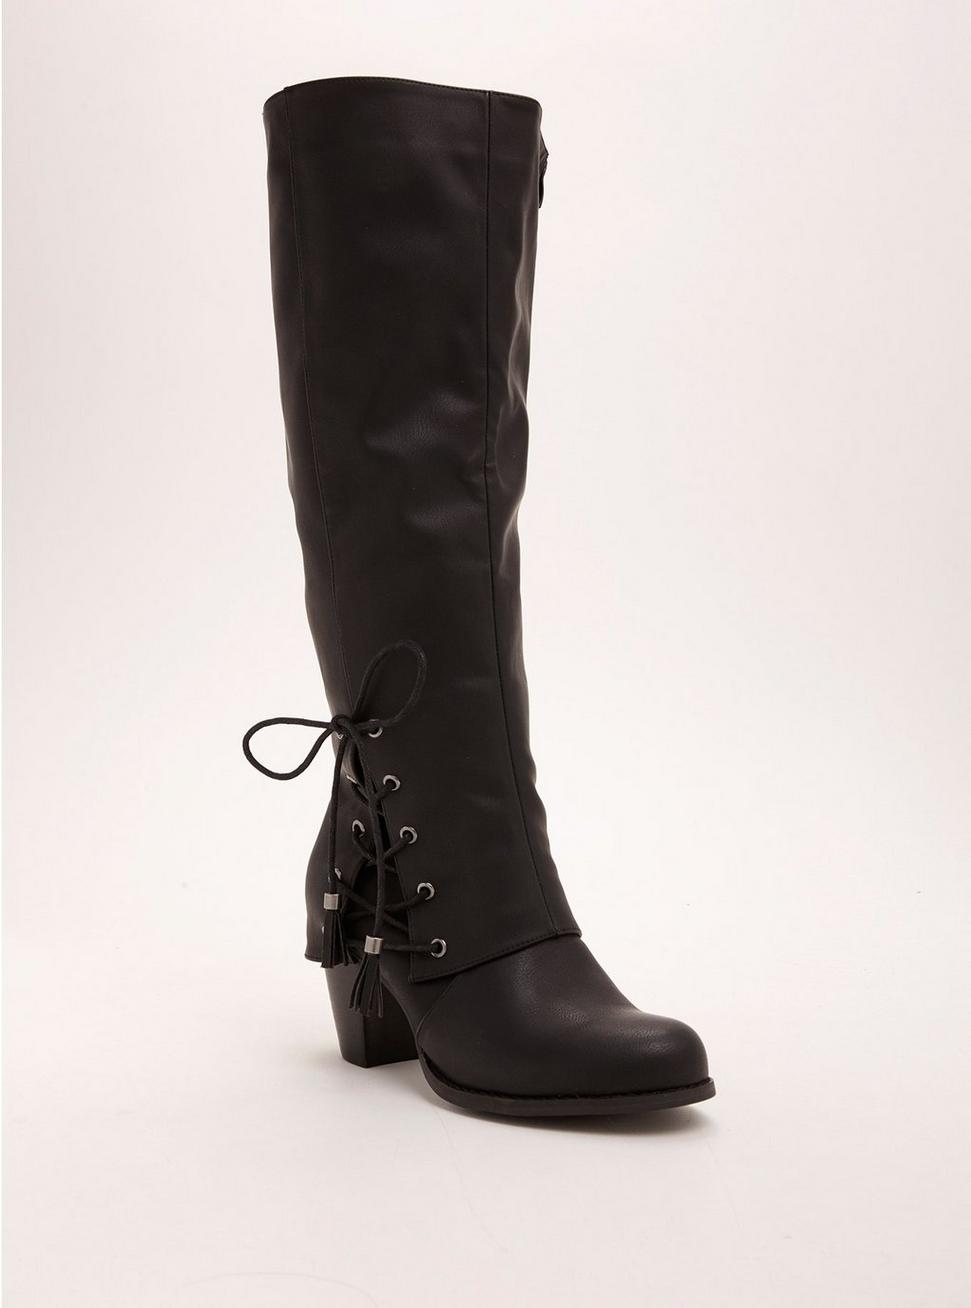 Plus Size - Lace Up Side Heel Boots (Wide Width & Wide Calf) - Torrid